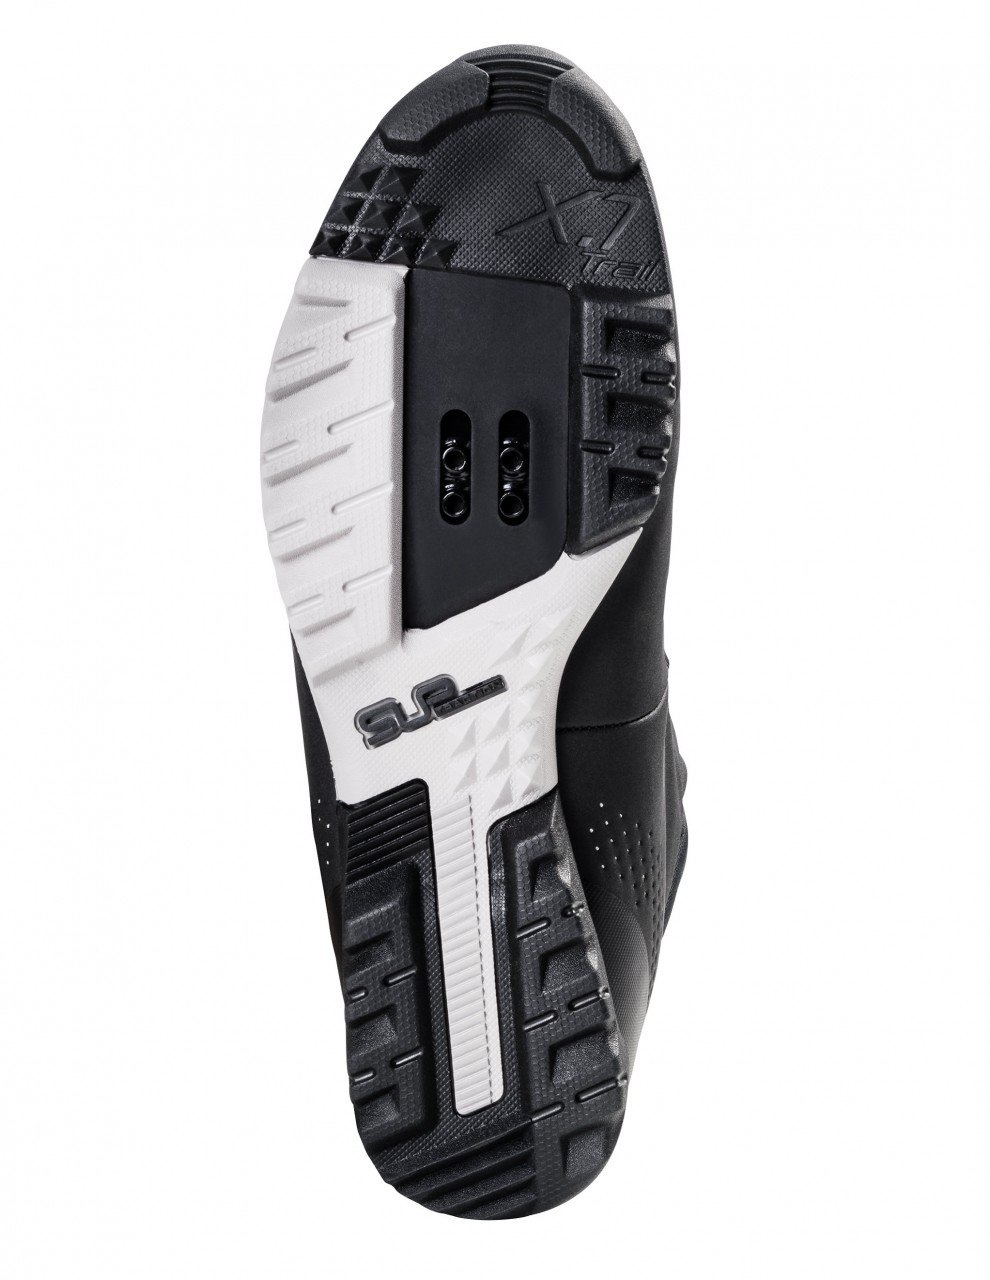 The New Minaki Mid CPX MTB Shoe from Vaude | BikeToday.news